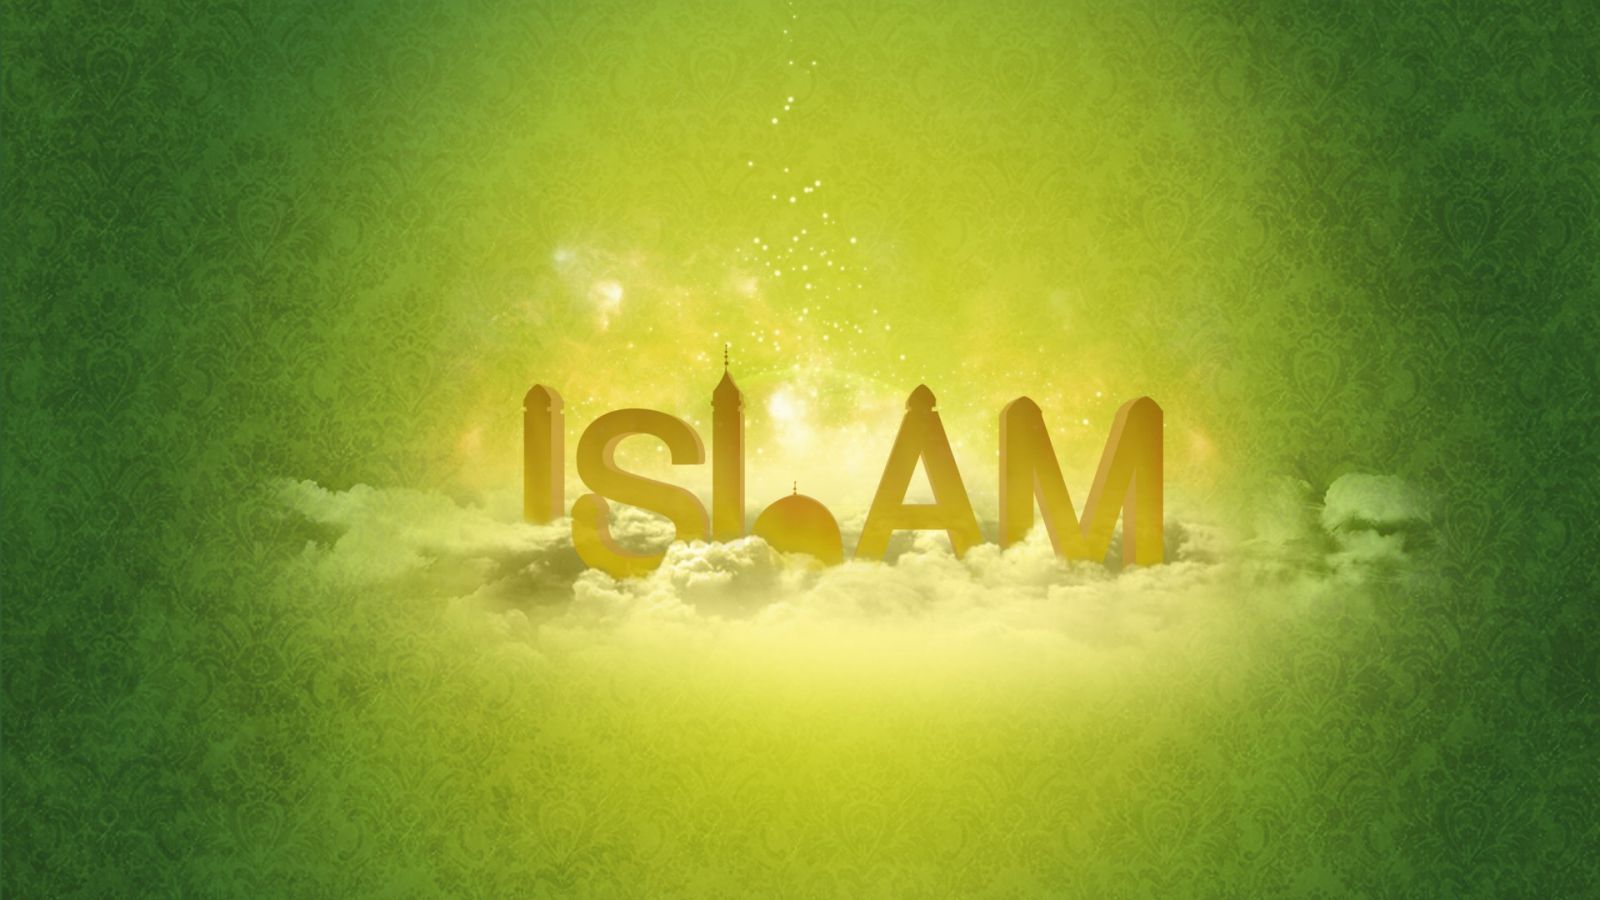 Don T Panic I M Islamic Introduction To Islam